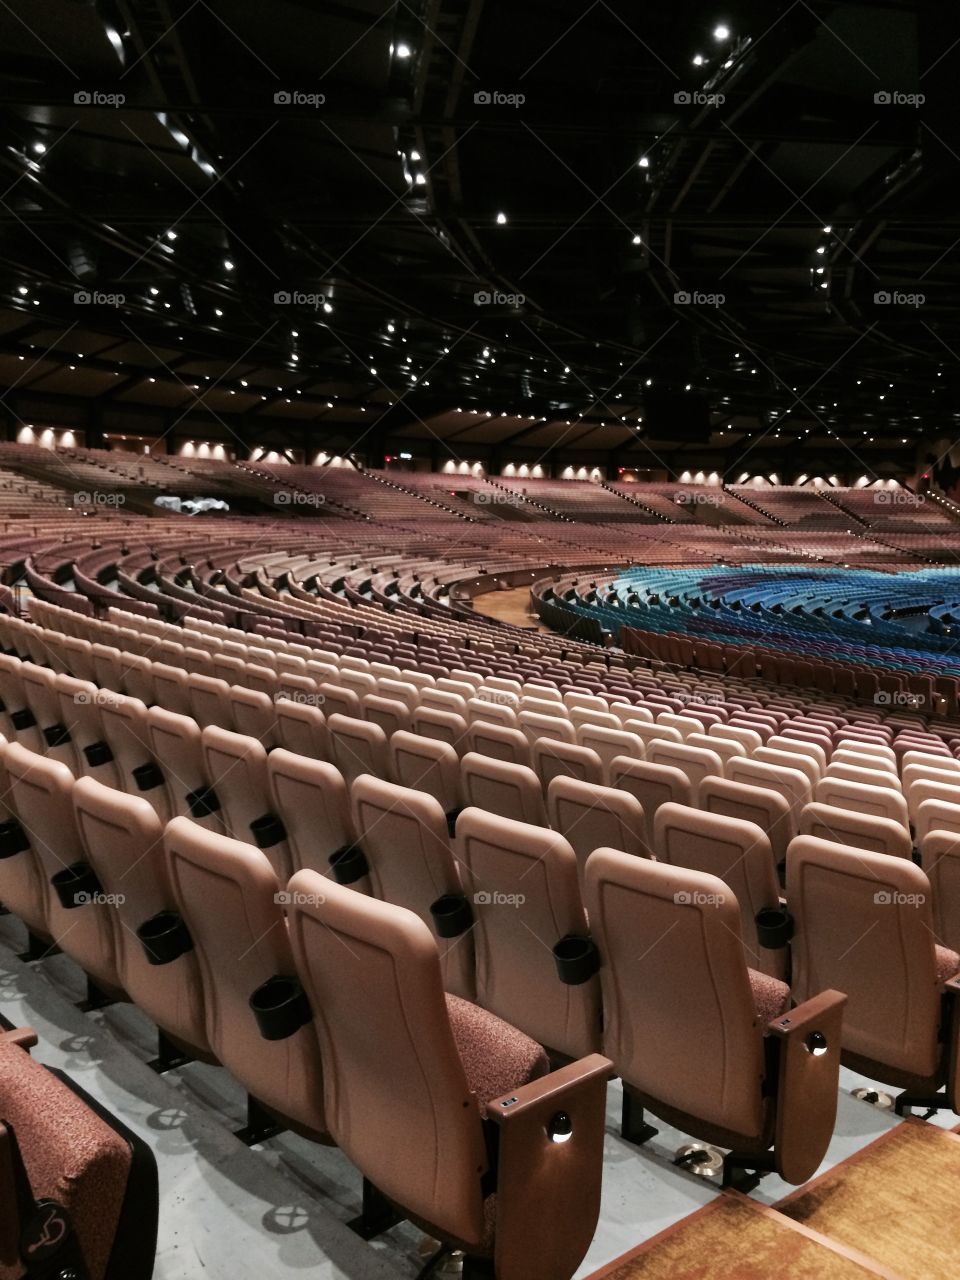 An Epic auditorium 